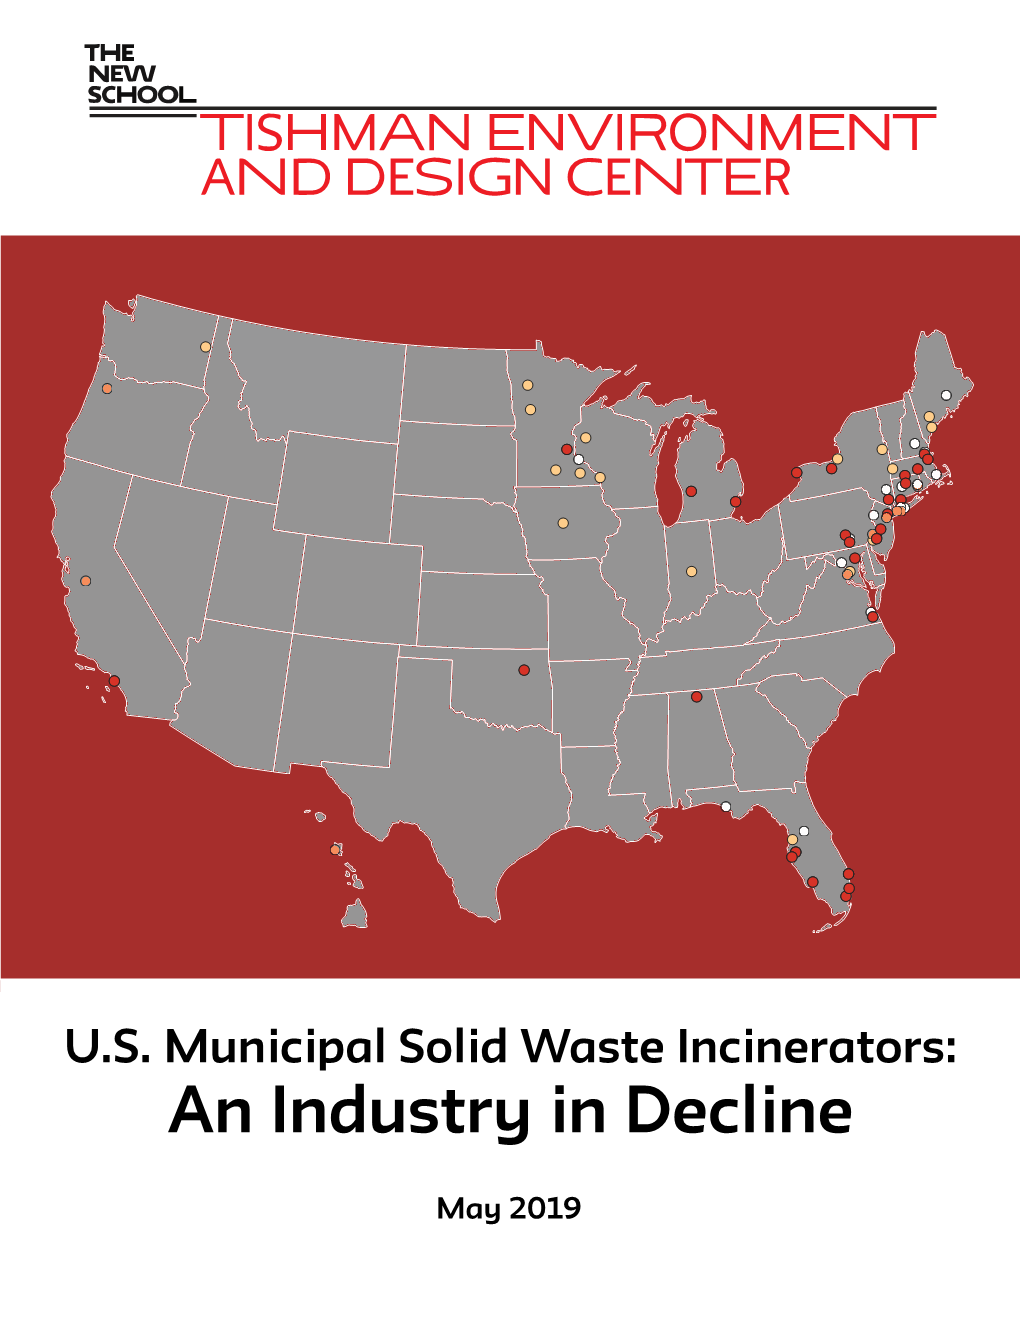 U.S. Municipal Solid Waste Incinerators: an Industry in Decline